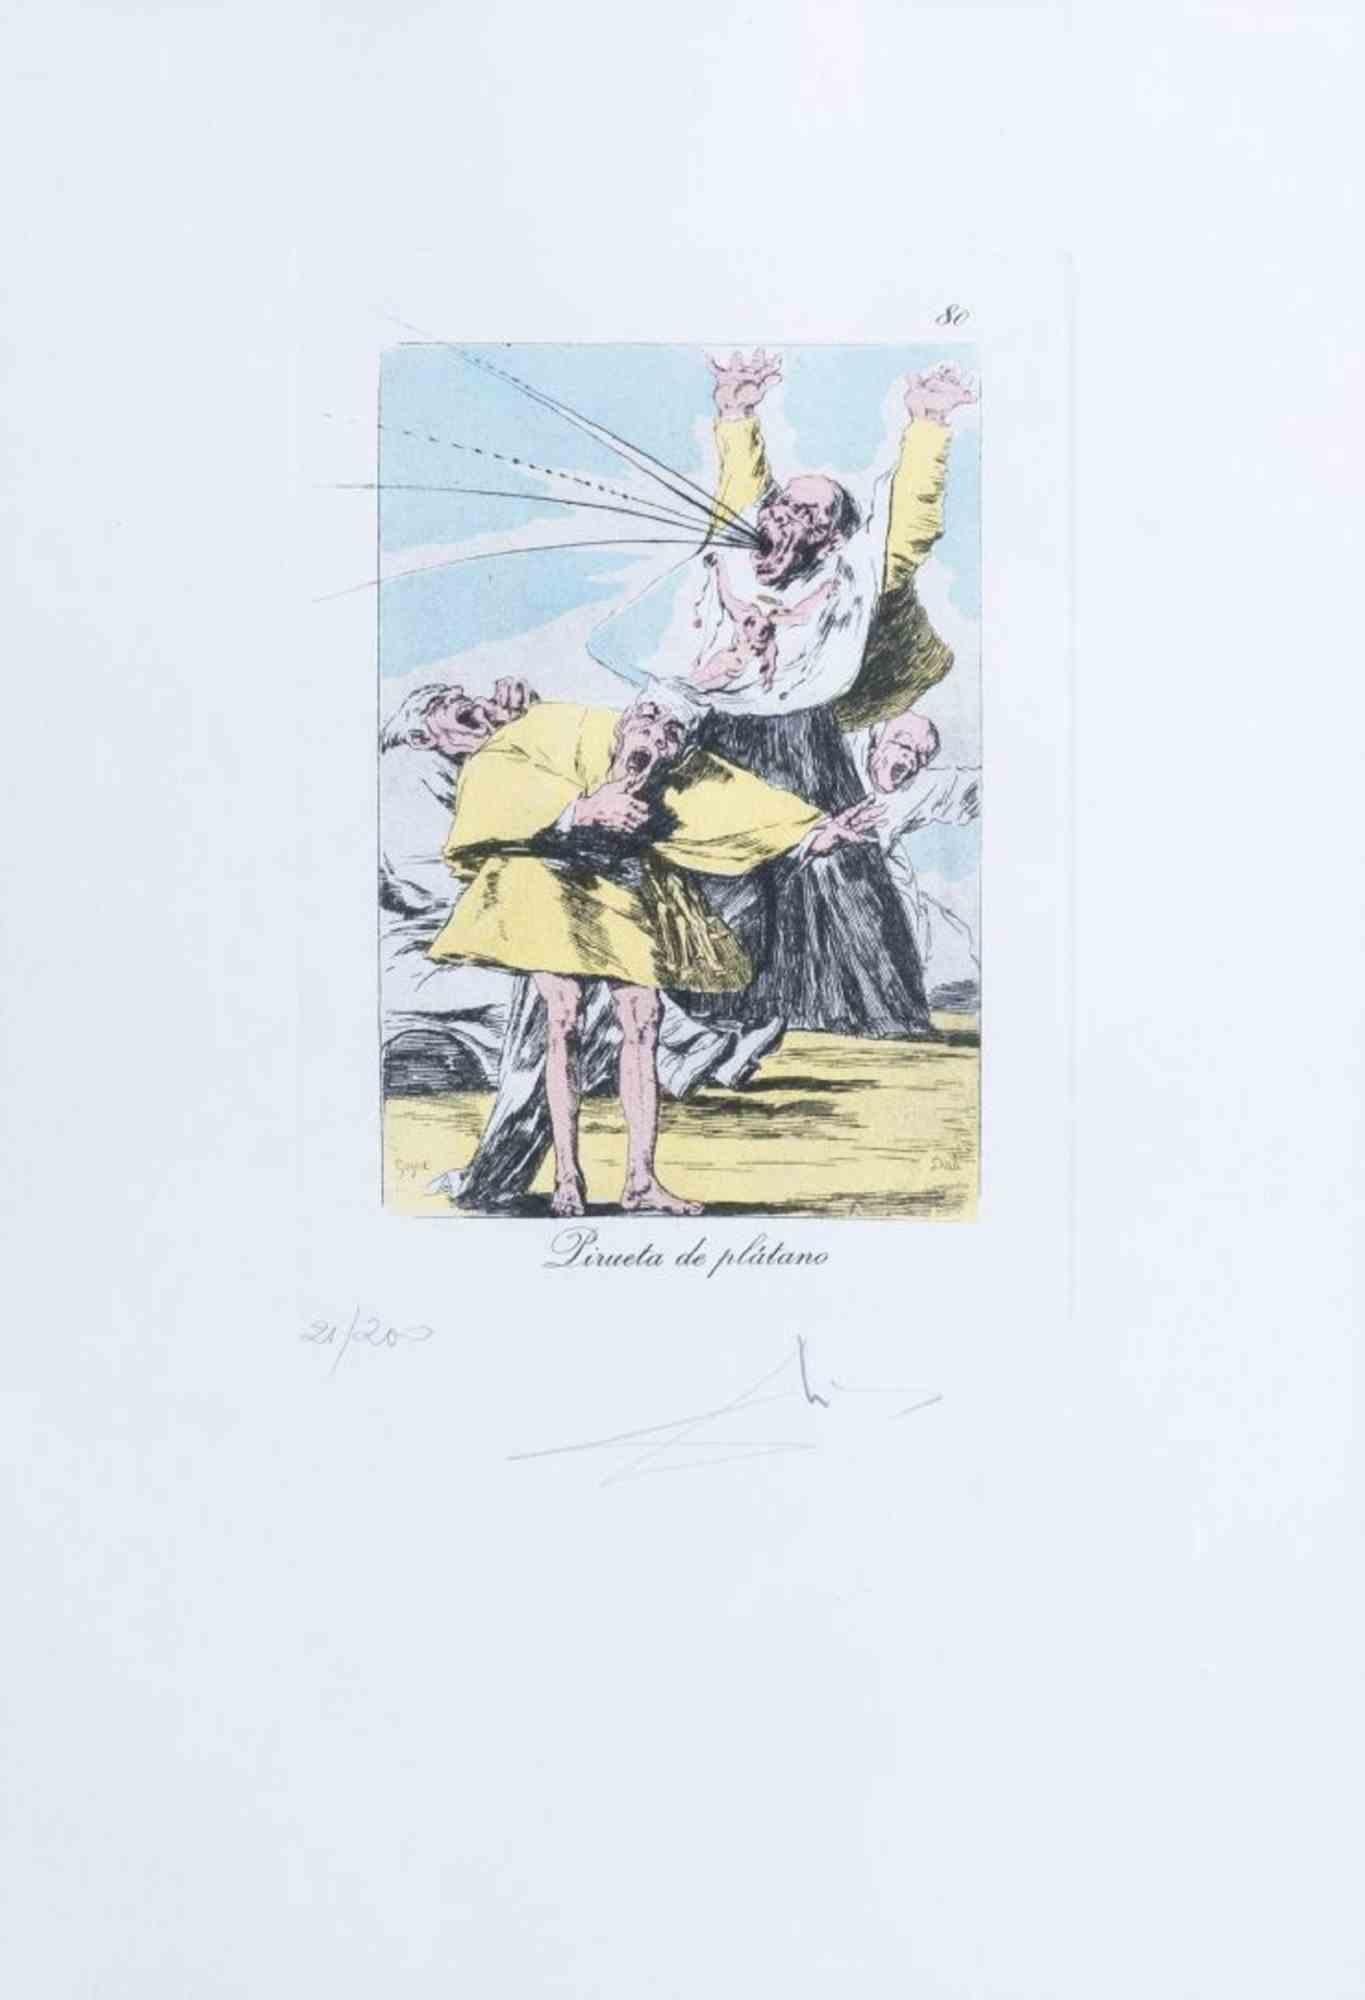 Figurative Print Salvador Dalí - Pirueta de Plátano - Pointe sèche et collotype de S.Dalì - 1977